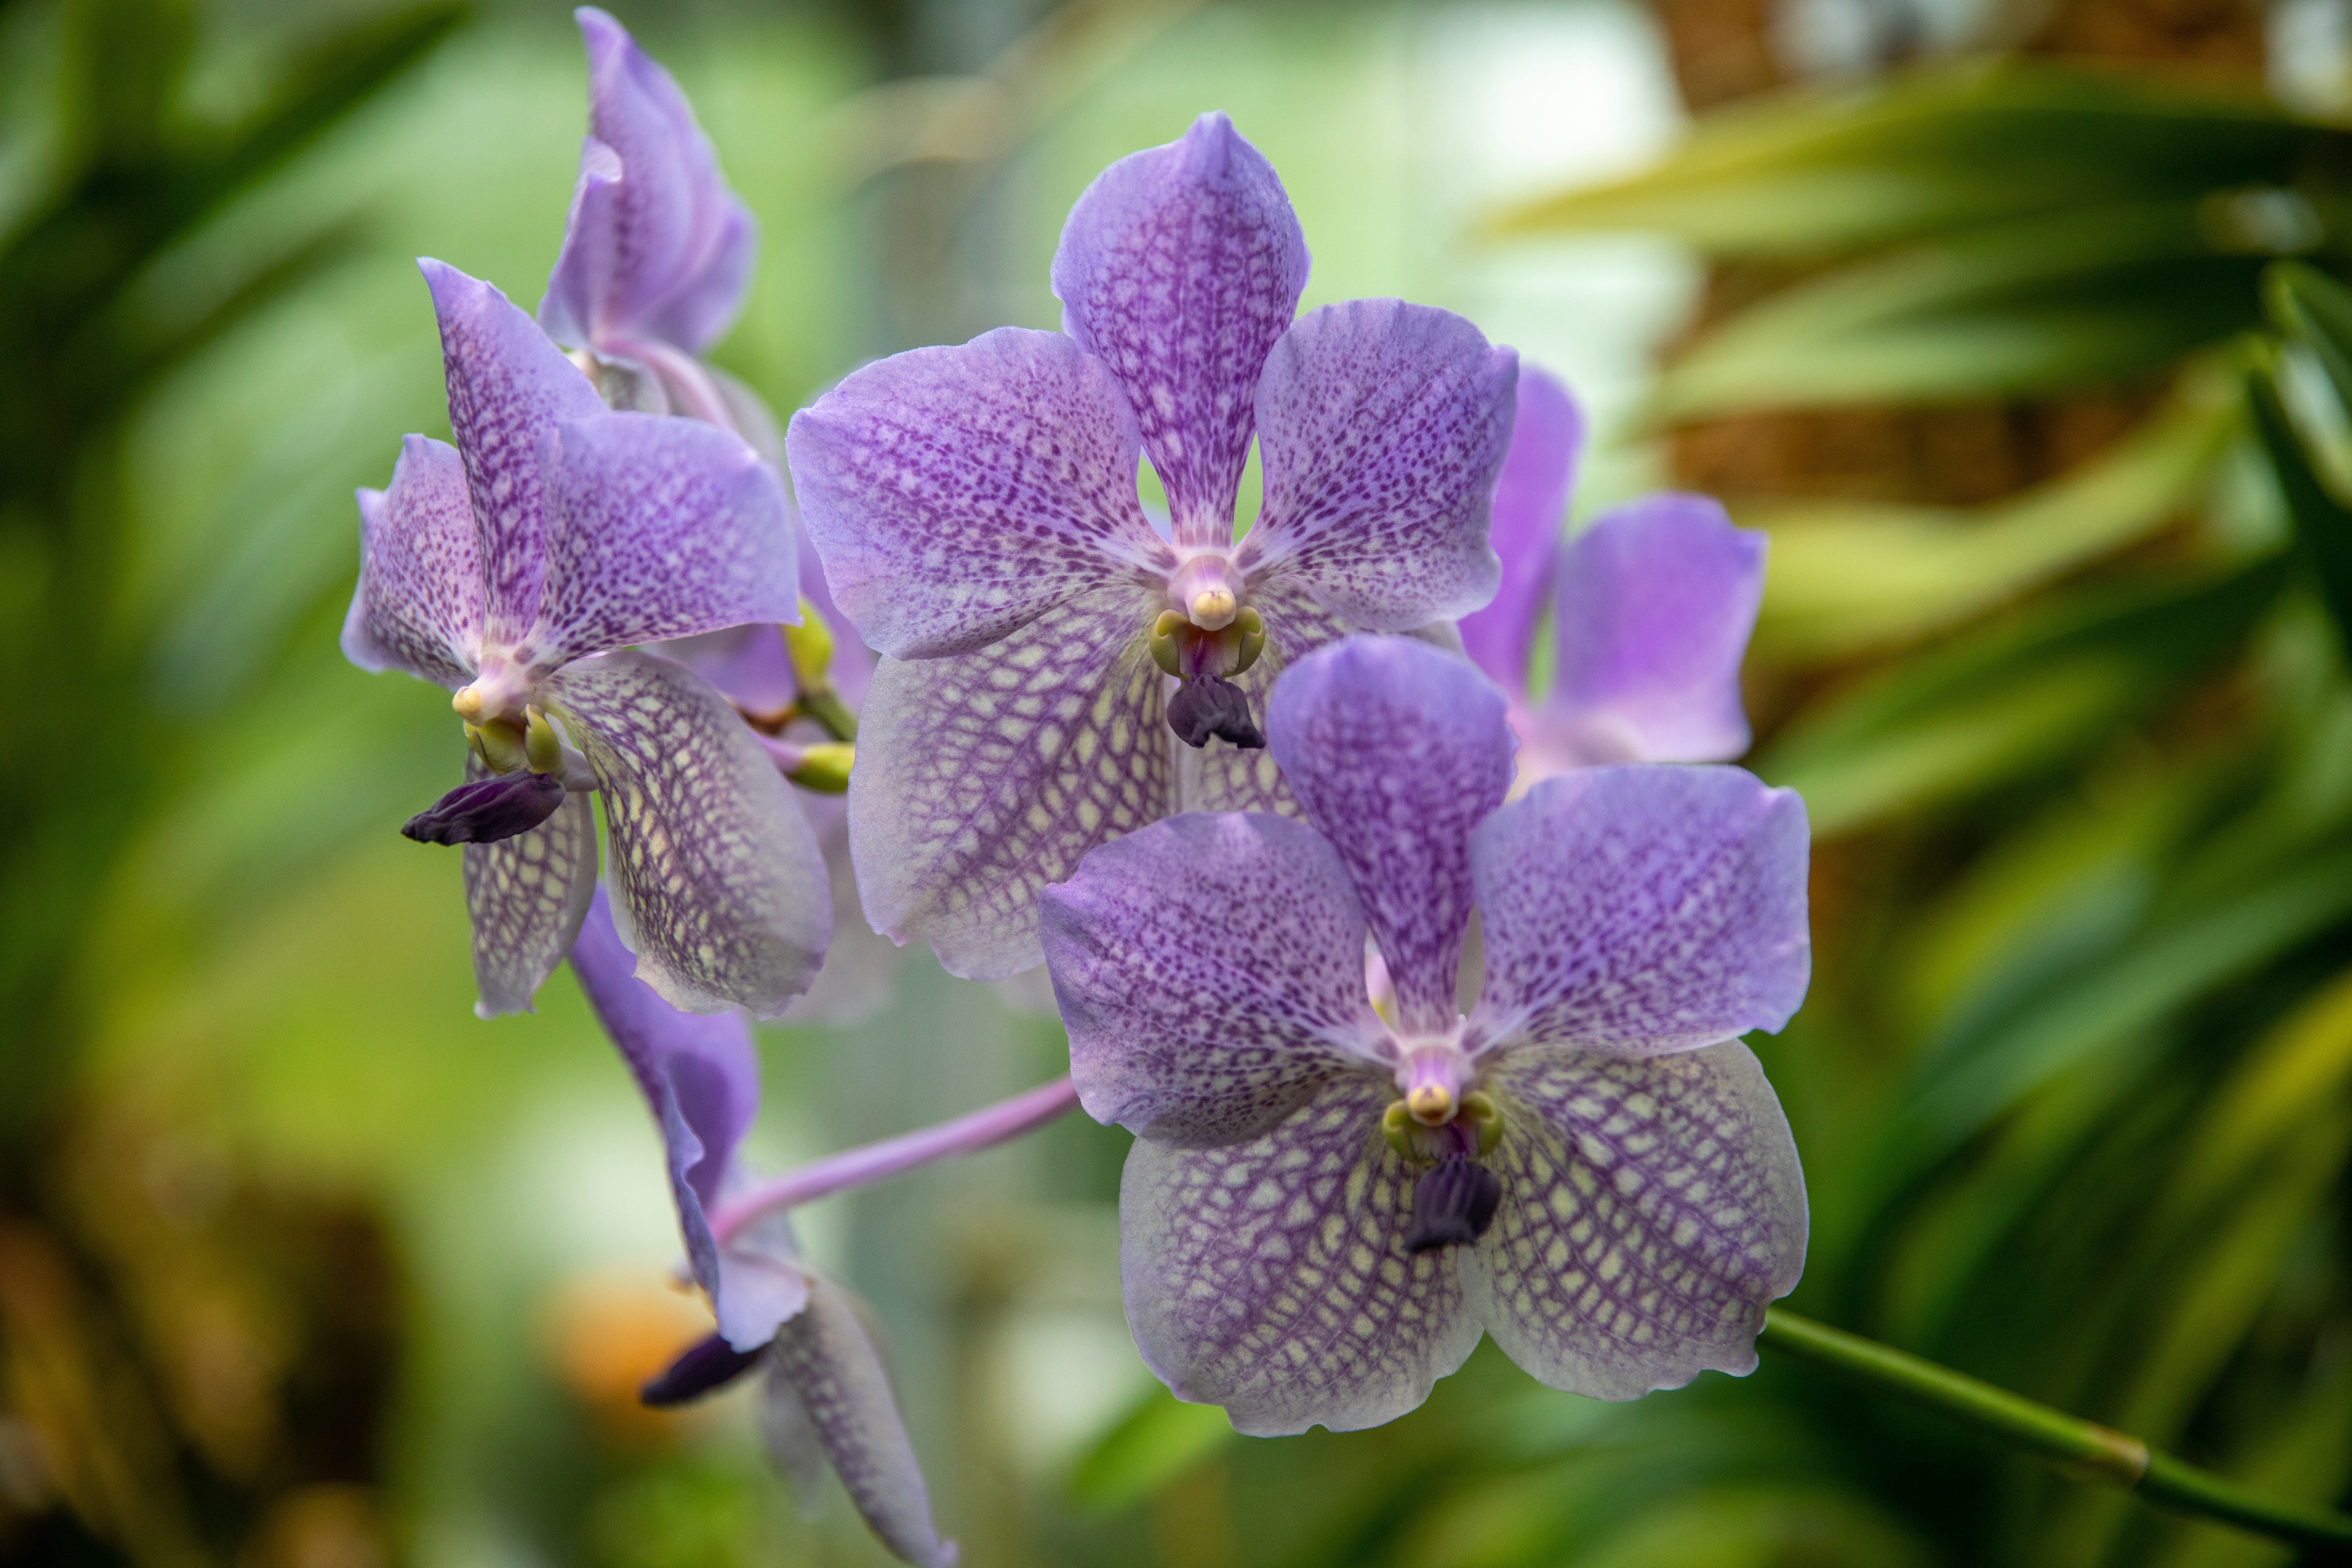 Orchid 4k Ultra HD Wallpaper